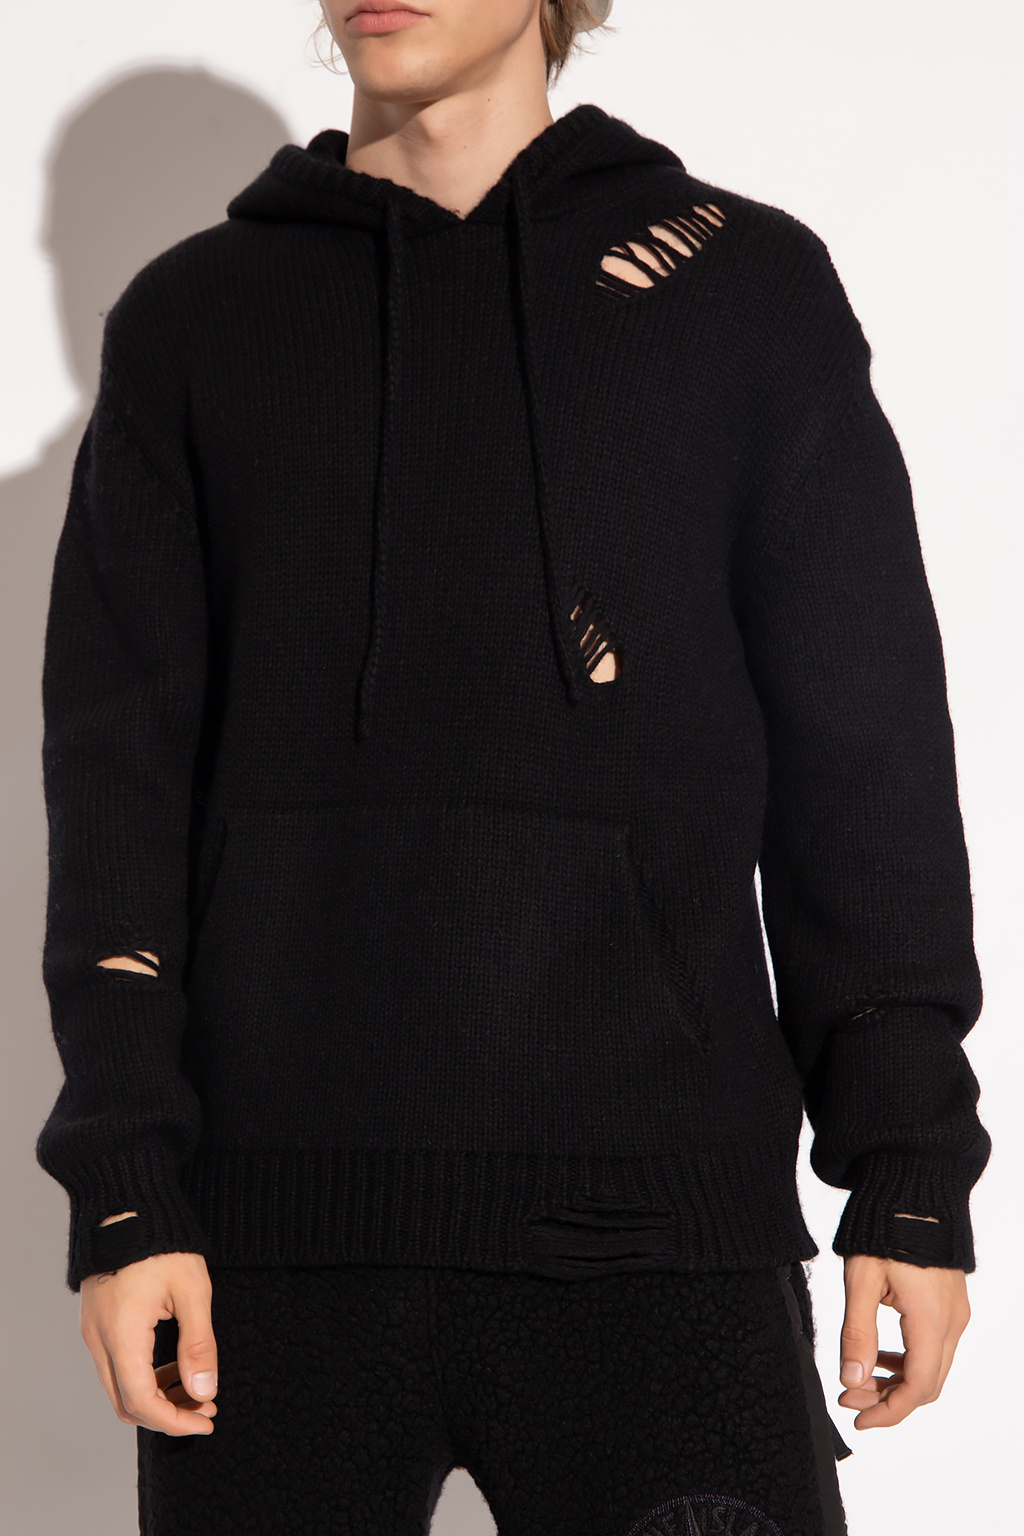 Iro ‘Noris’ hooded Black sweater